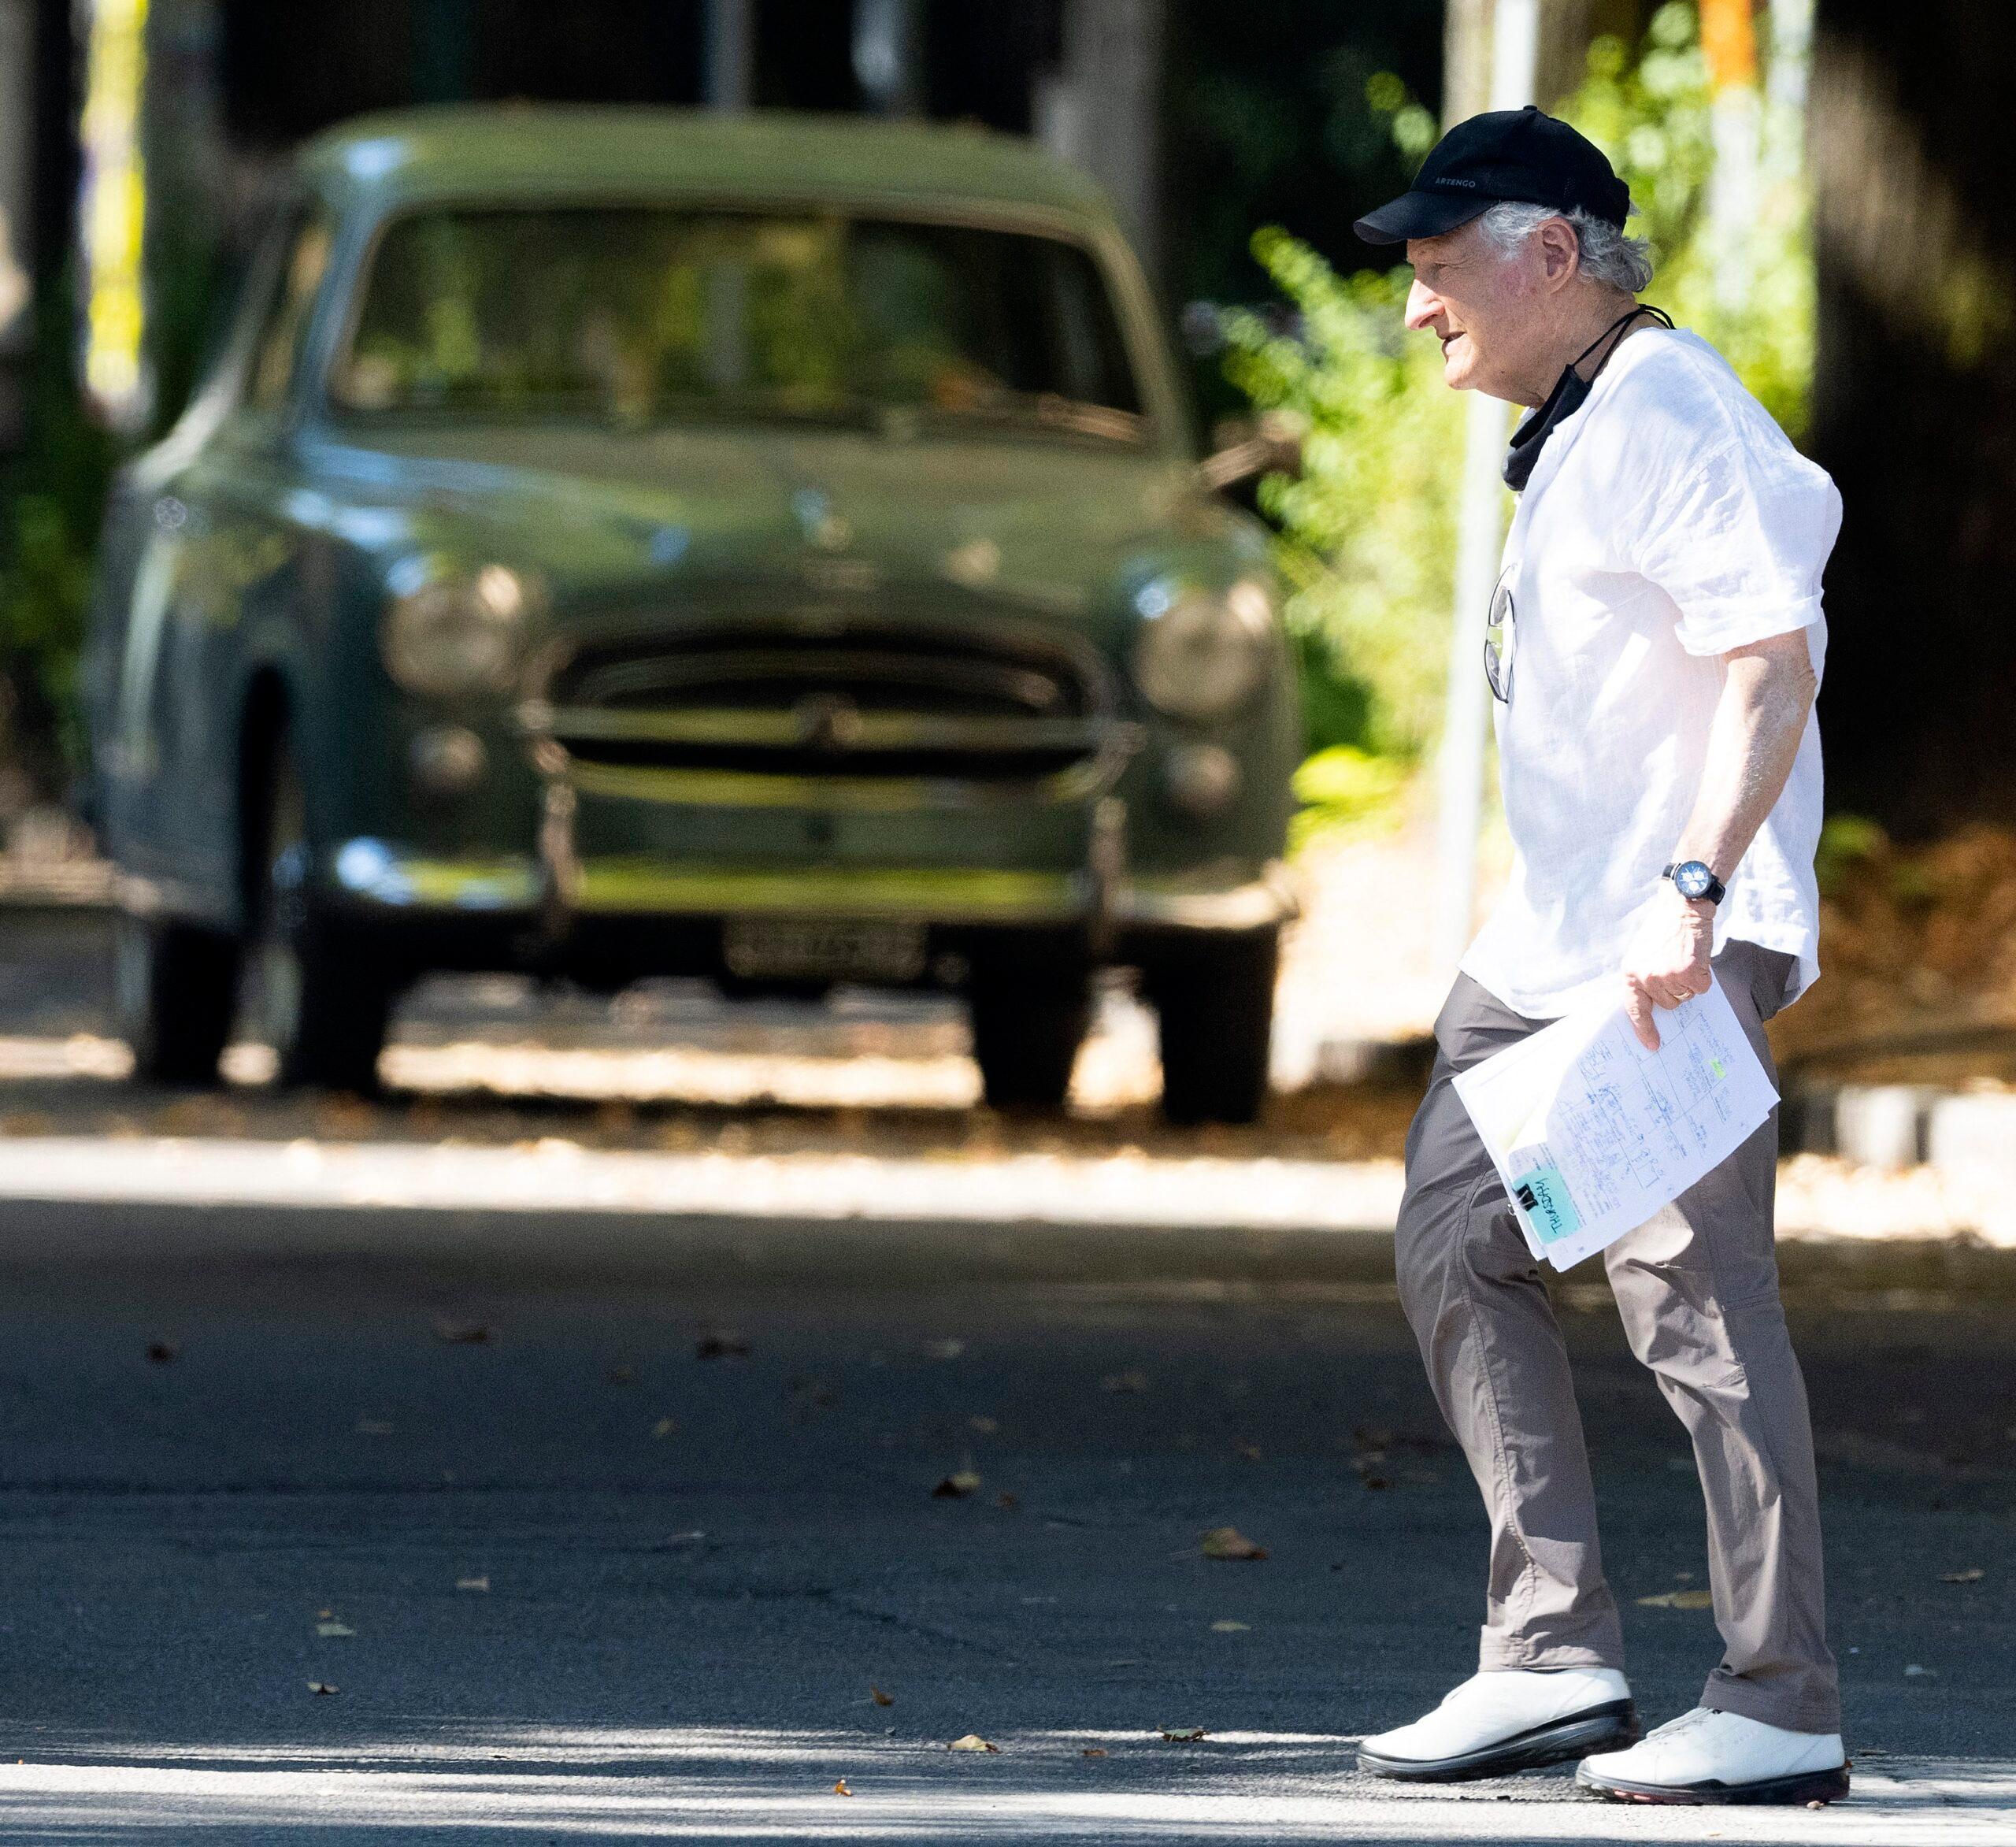 Penelope Cruz filming Enzo Ferraris biopics in Modena directed by Michael Mann